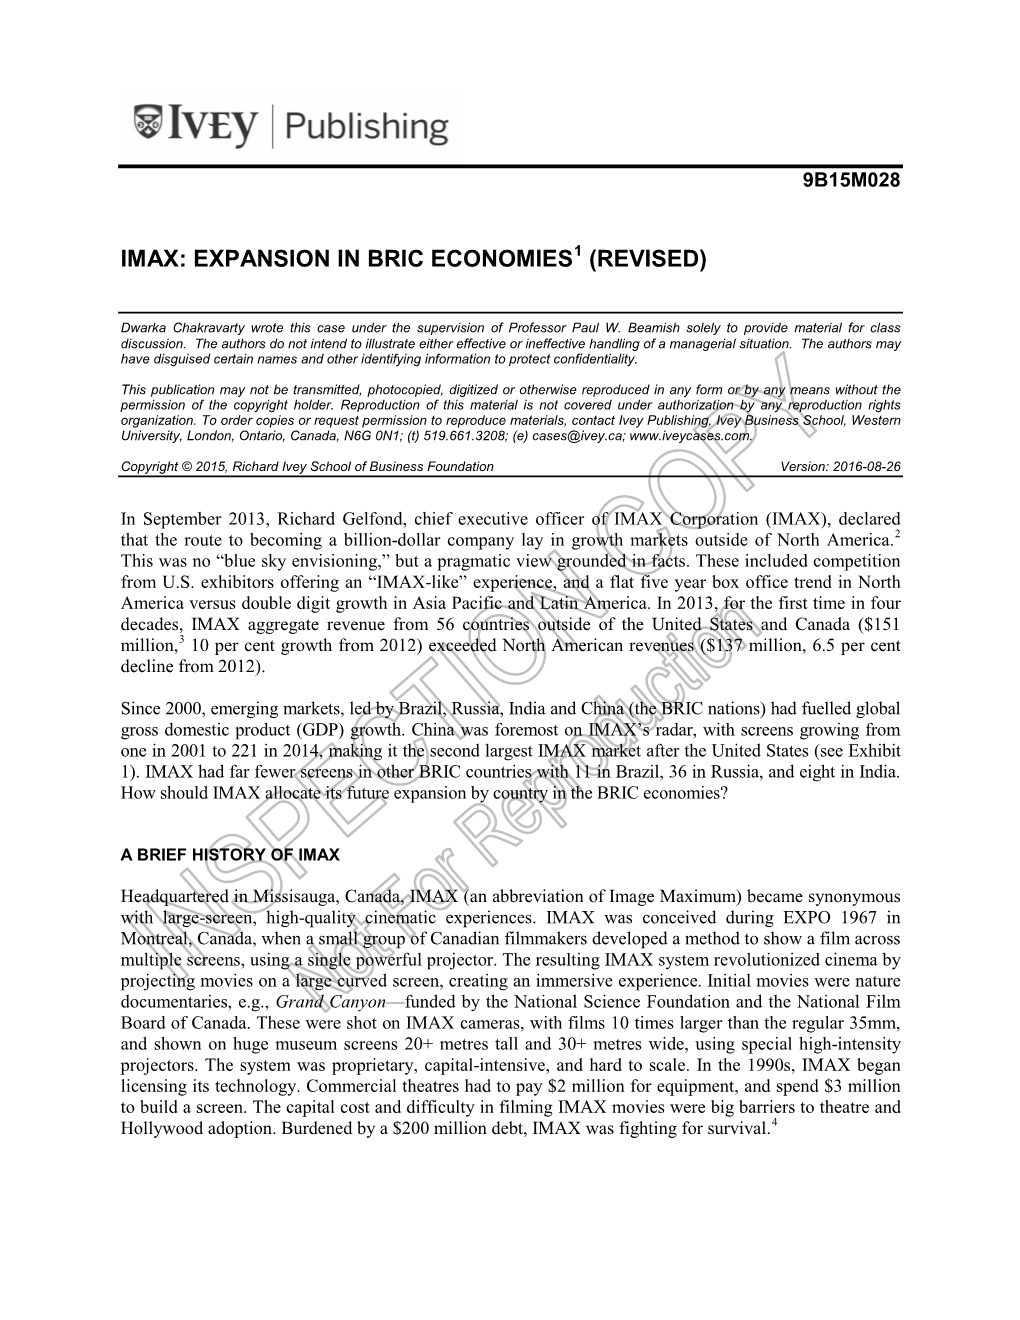 Imax: Expansion in Bric Economies (Revised)